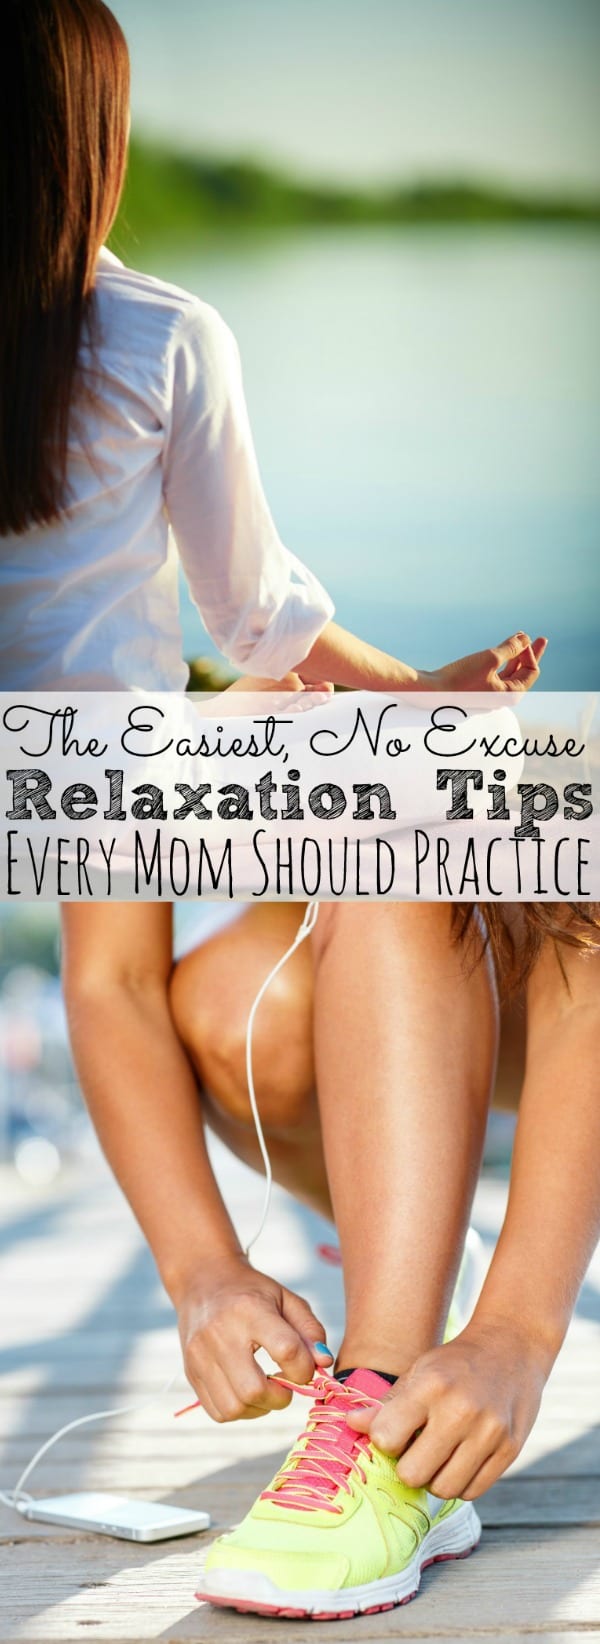 Easy Relaxation Tips For Moms